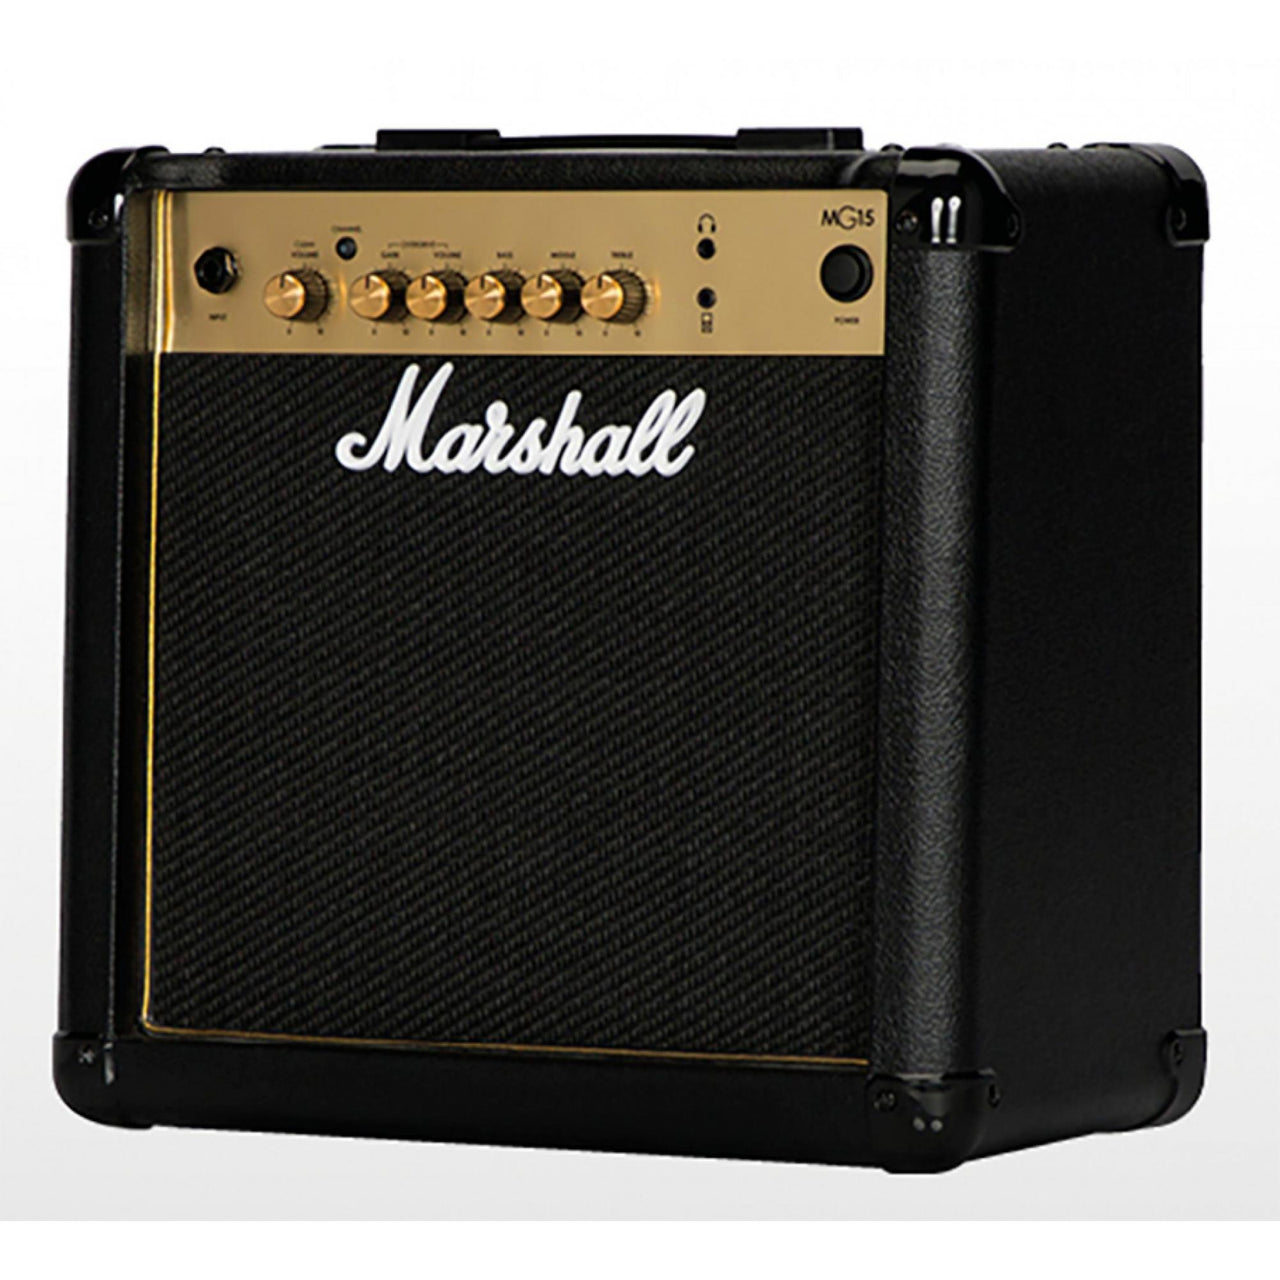 Amplificador Marshall Mg15g Para Guitarra Mg Gold 15w